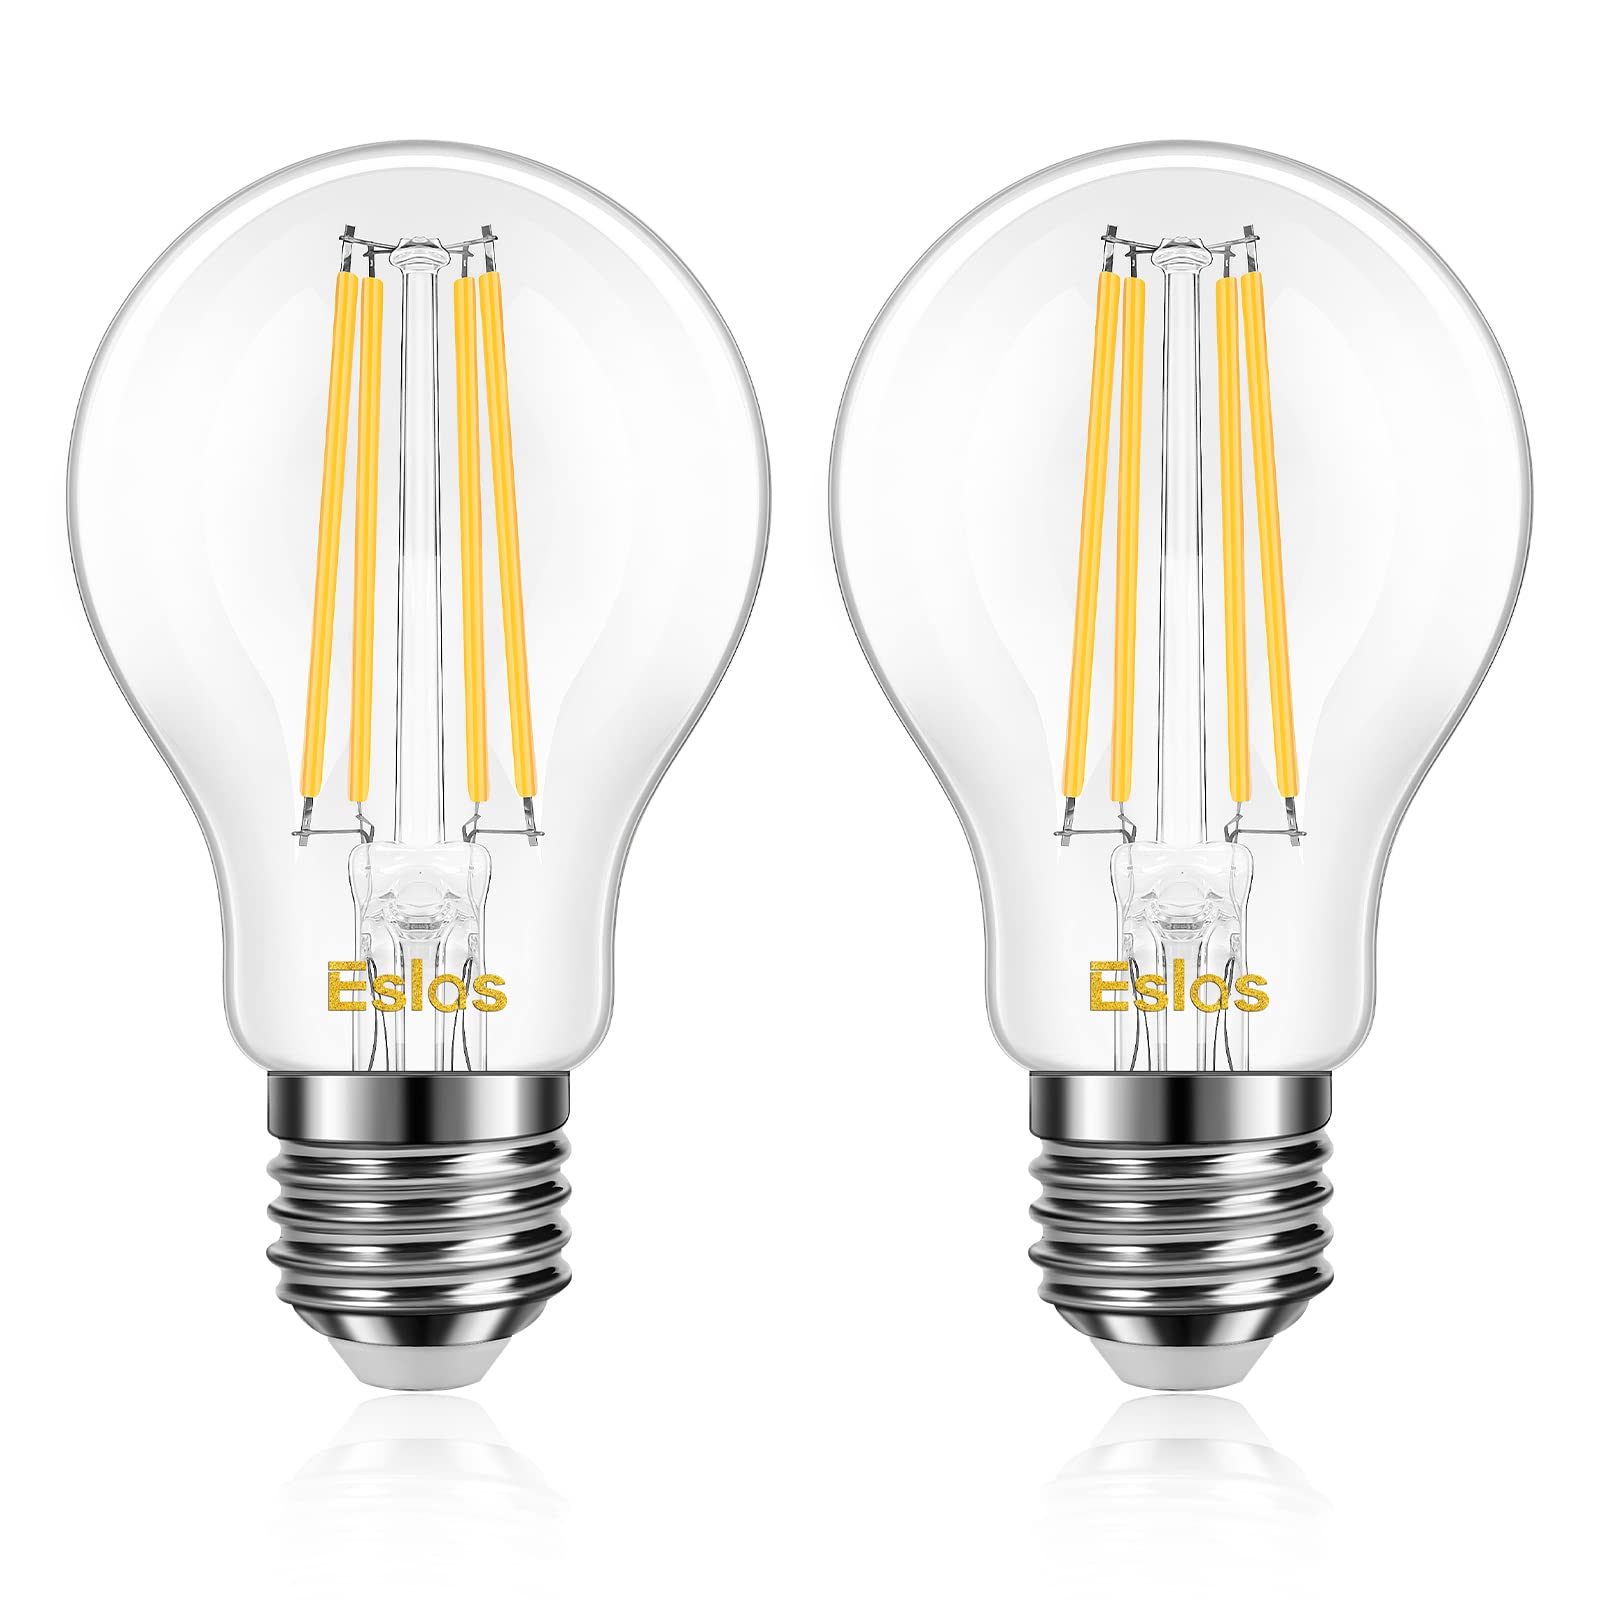 Eslas E27 LED Filament Bulbs, 8W 3000K Warm White 880Lm, A60 LED Edison Screw Light Bulb, 80W Incandescent Equivalent, Not Dimmable 2 Pack [Energy Class E]